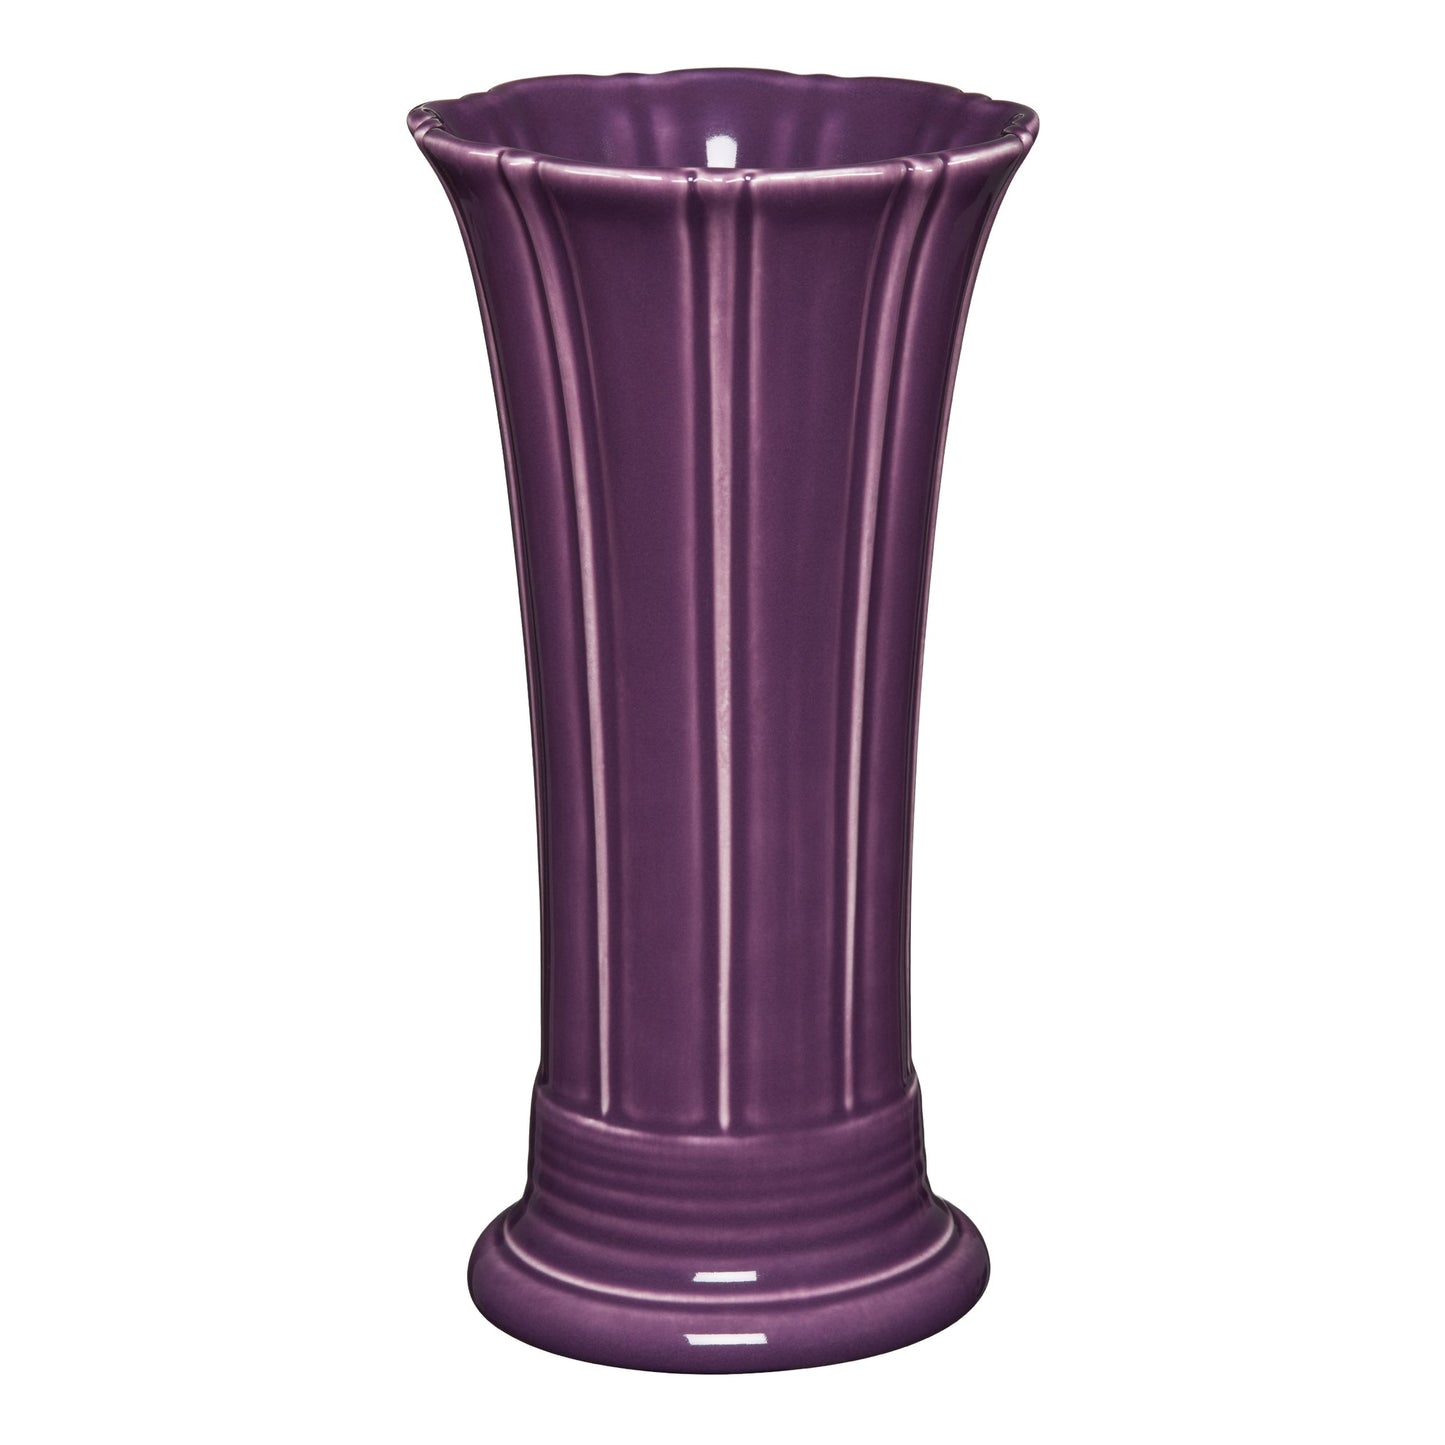 Medium Flower Vase